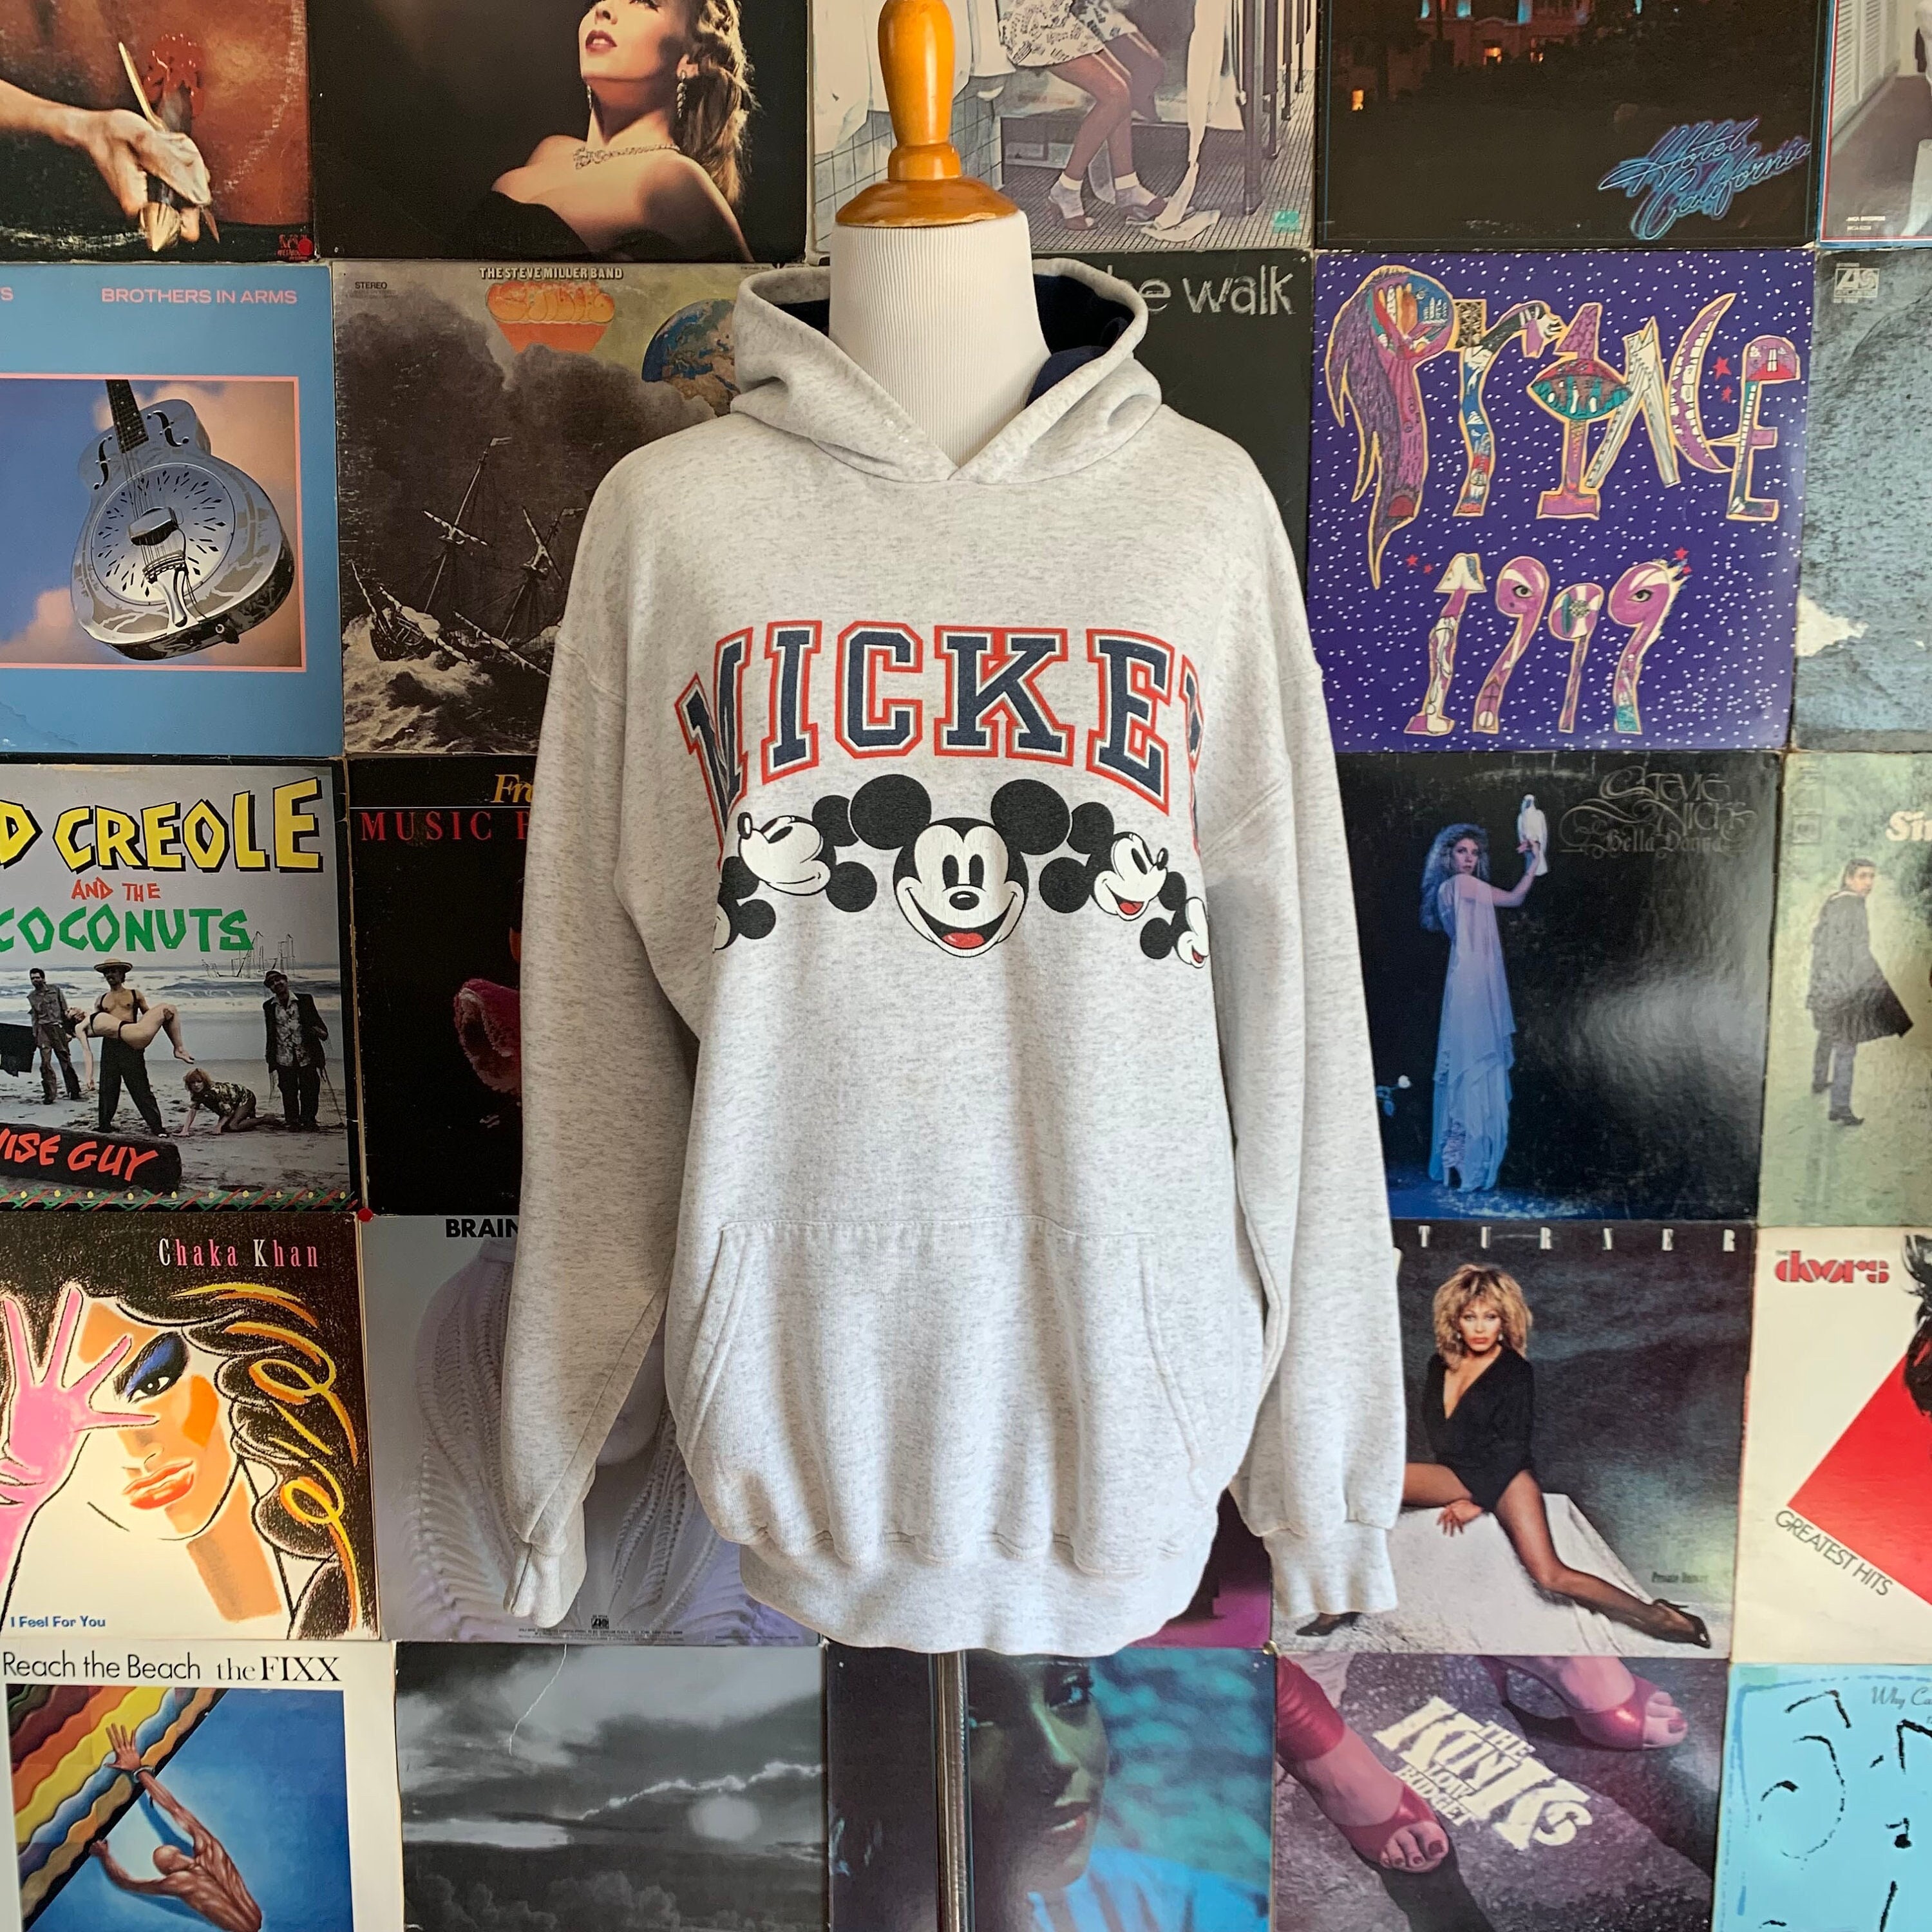 90s Disney Mickey Mouse hoodie